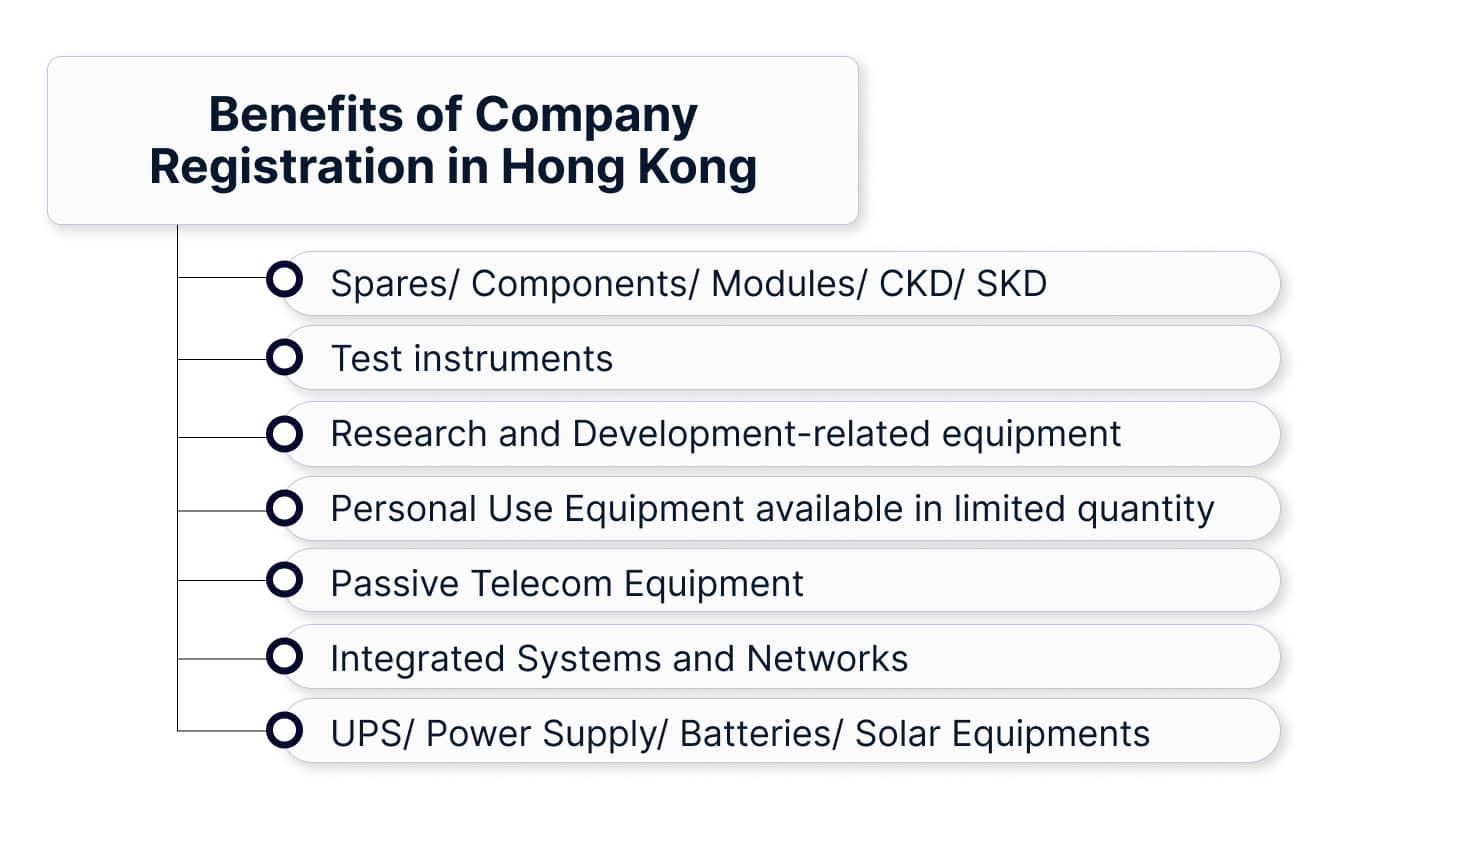 Benefits of Company Registration in Hong Kong